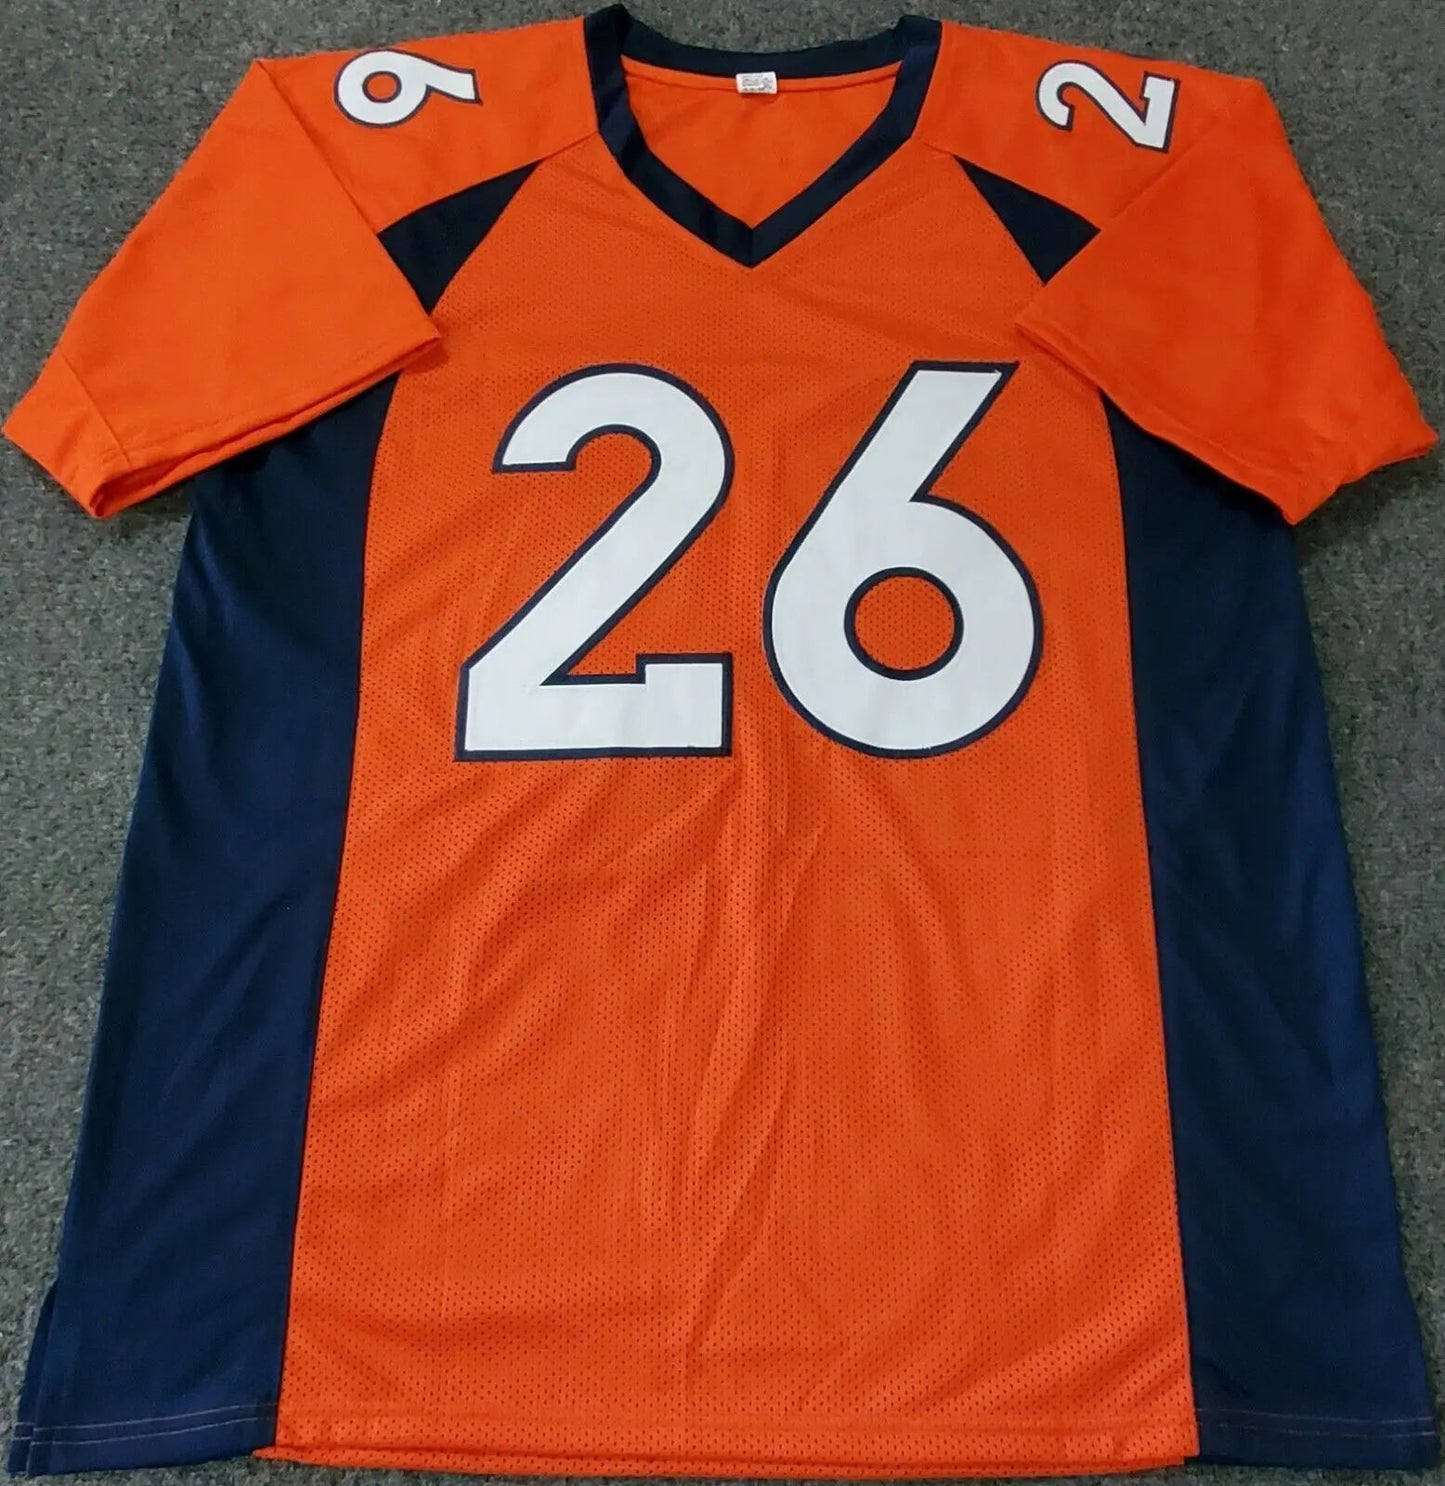 MVP Authentics Denver Broncos Clinton Portis Autographed Signed Jersey Psa Coa 161.10 sports jersey framing , jersey framing